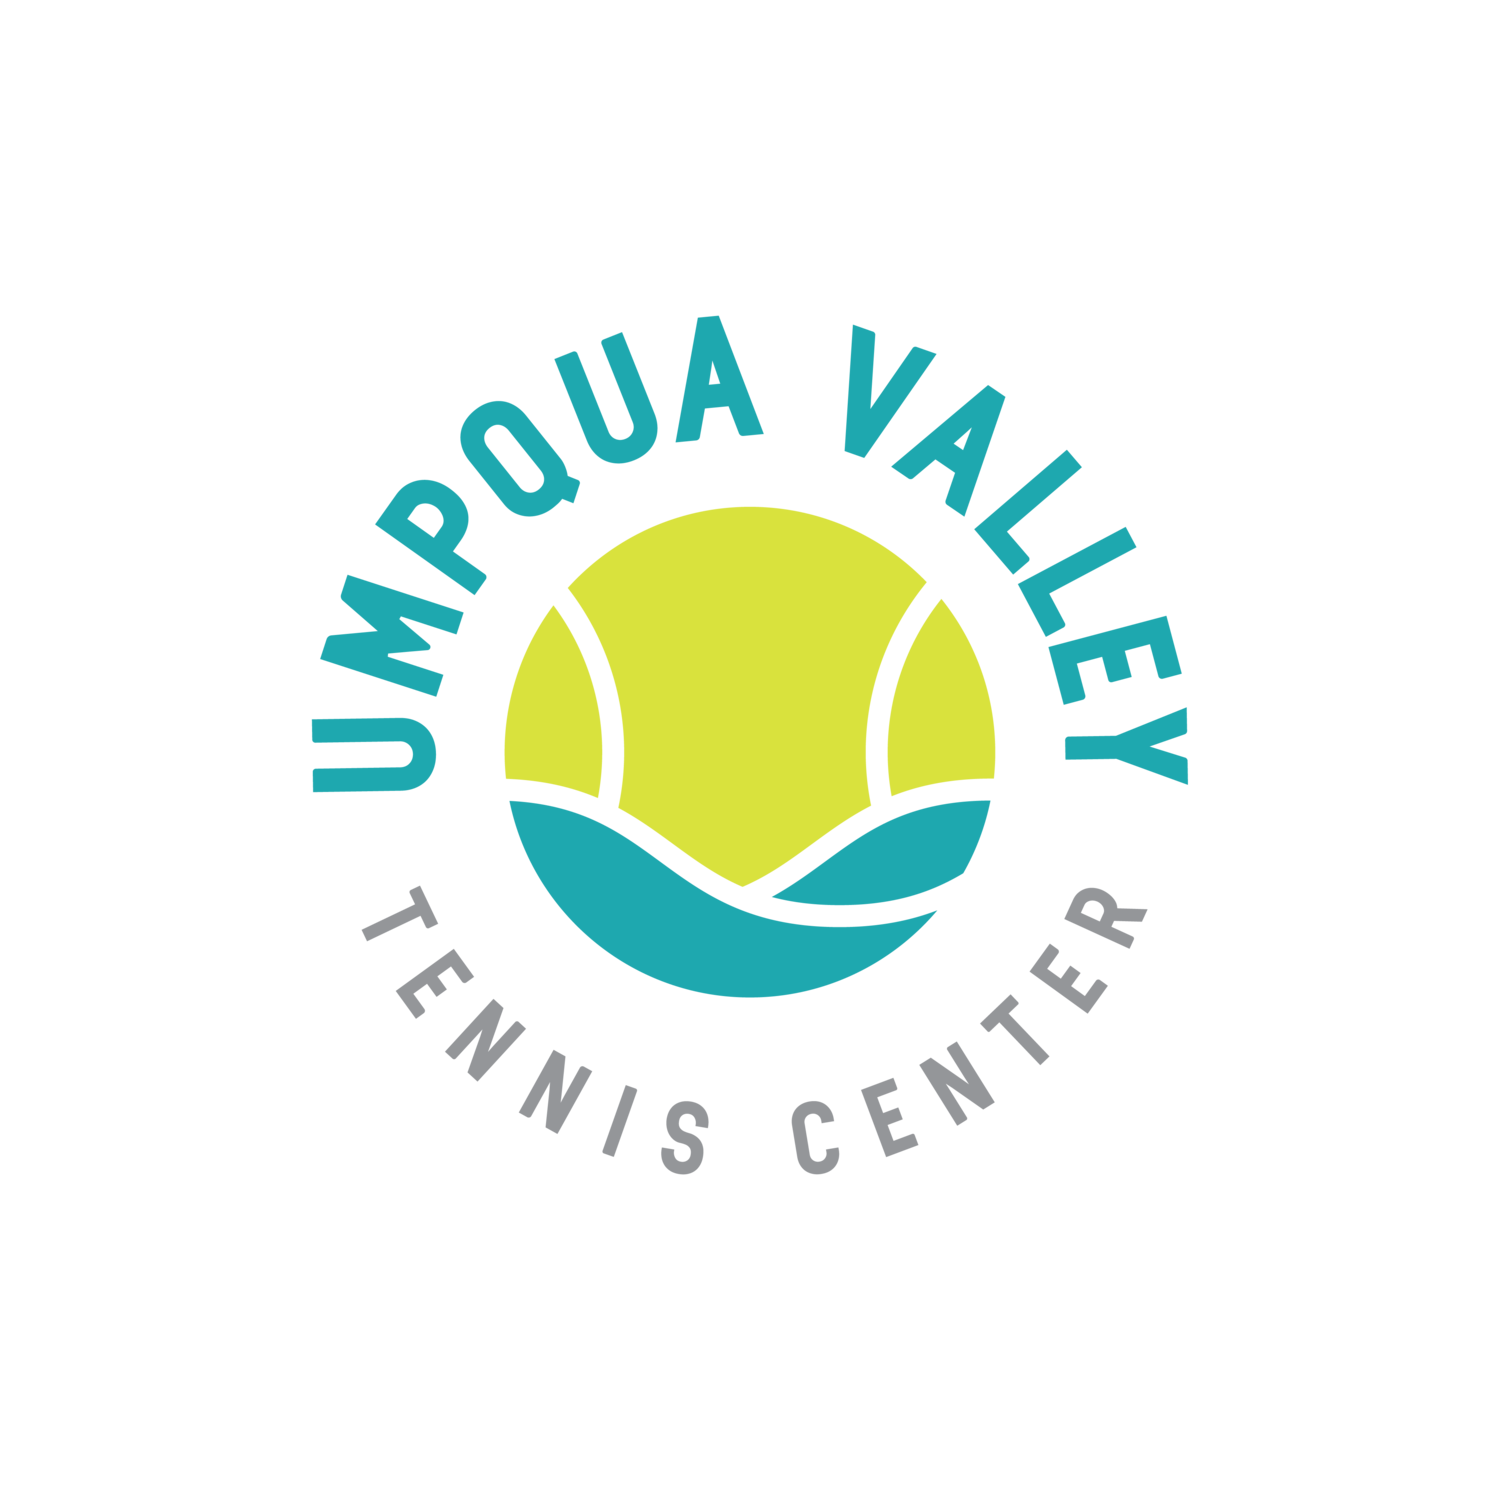 UTVC - A public tennis center in Roseburg, Oregon